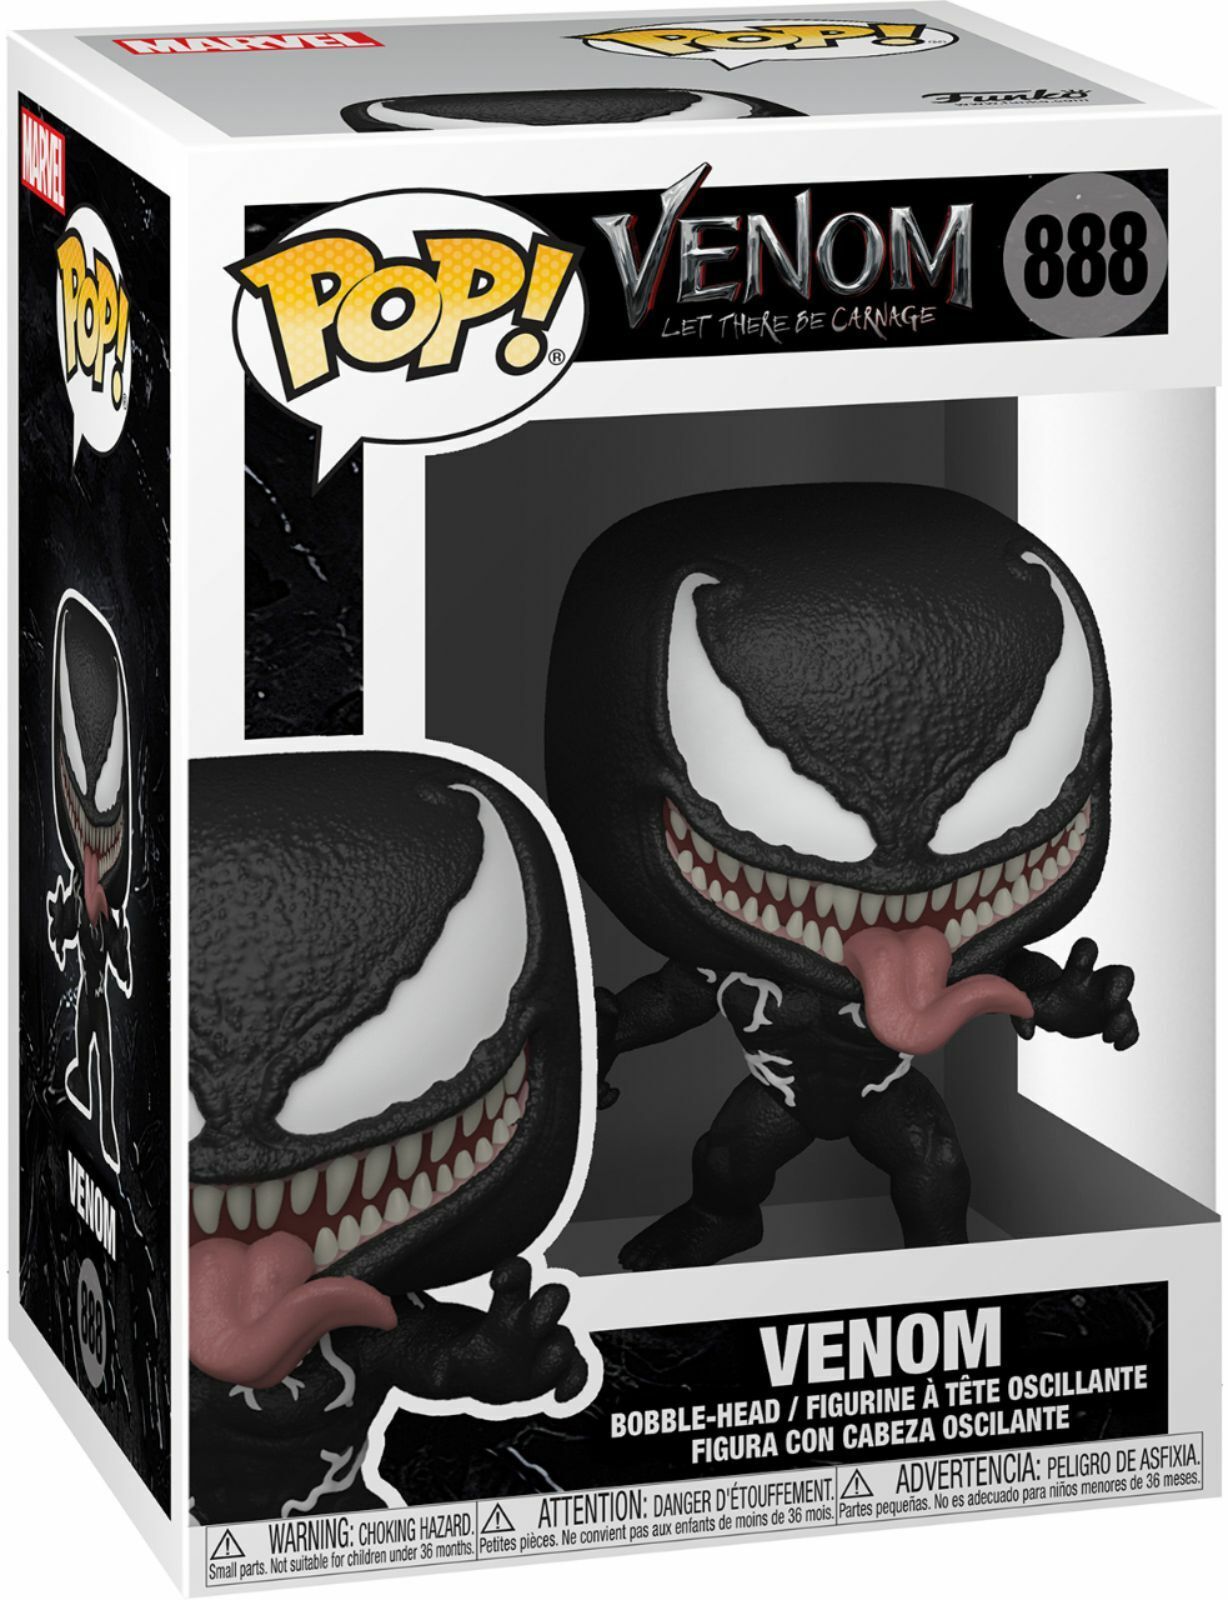 Venom: Let There be Carnage Venom Funko Pop Vinyl Figure #888